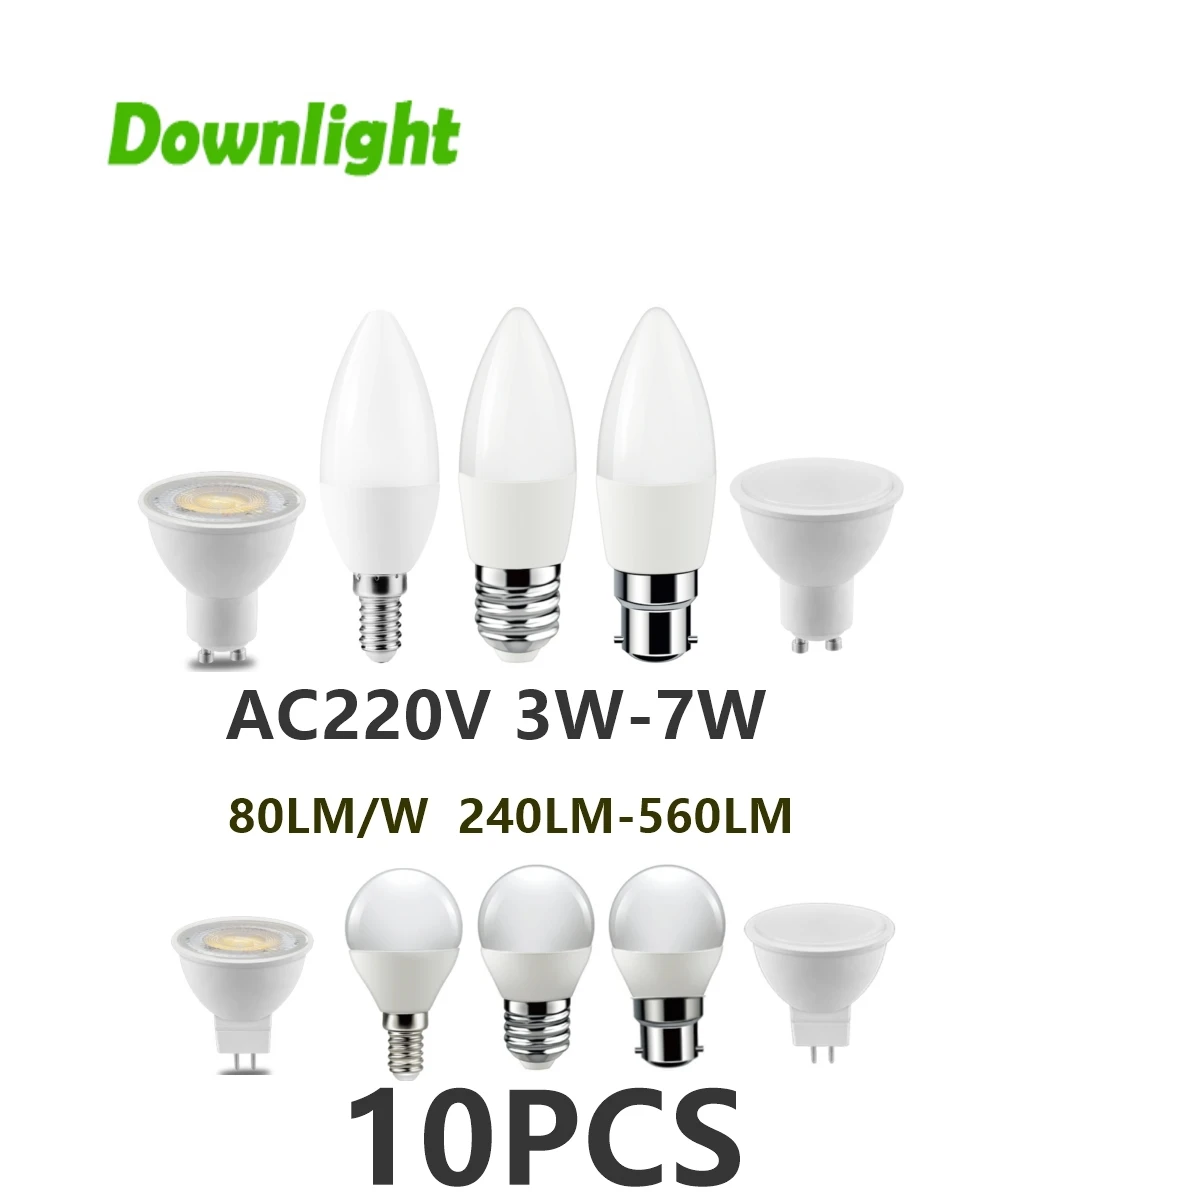 

10PCS Factory direct LED light bulb candle lamp G45 GU10 MR16 AC220V low power 3W-7W high lumen no strobe Apply to study kitchen